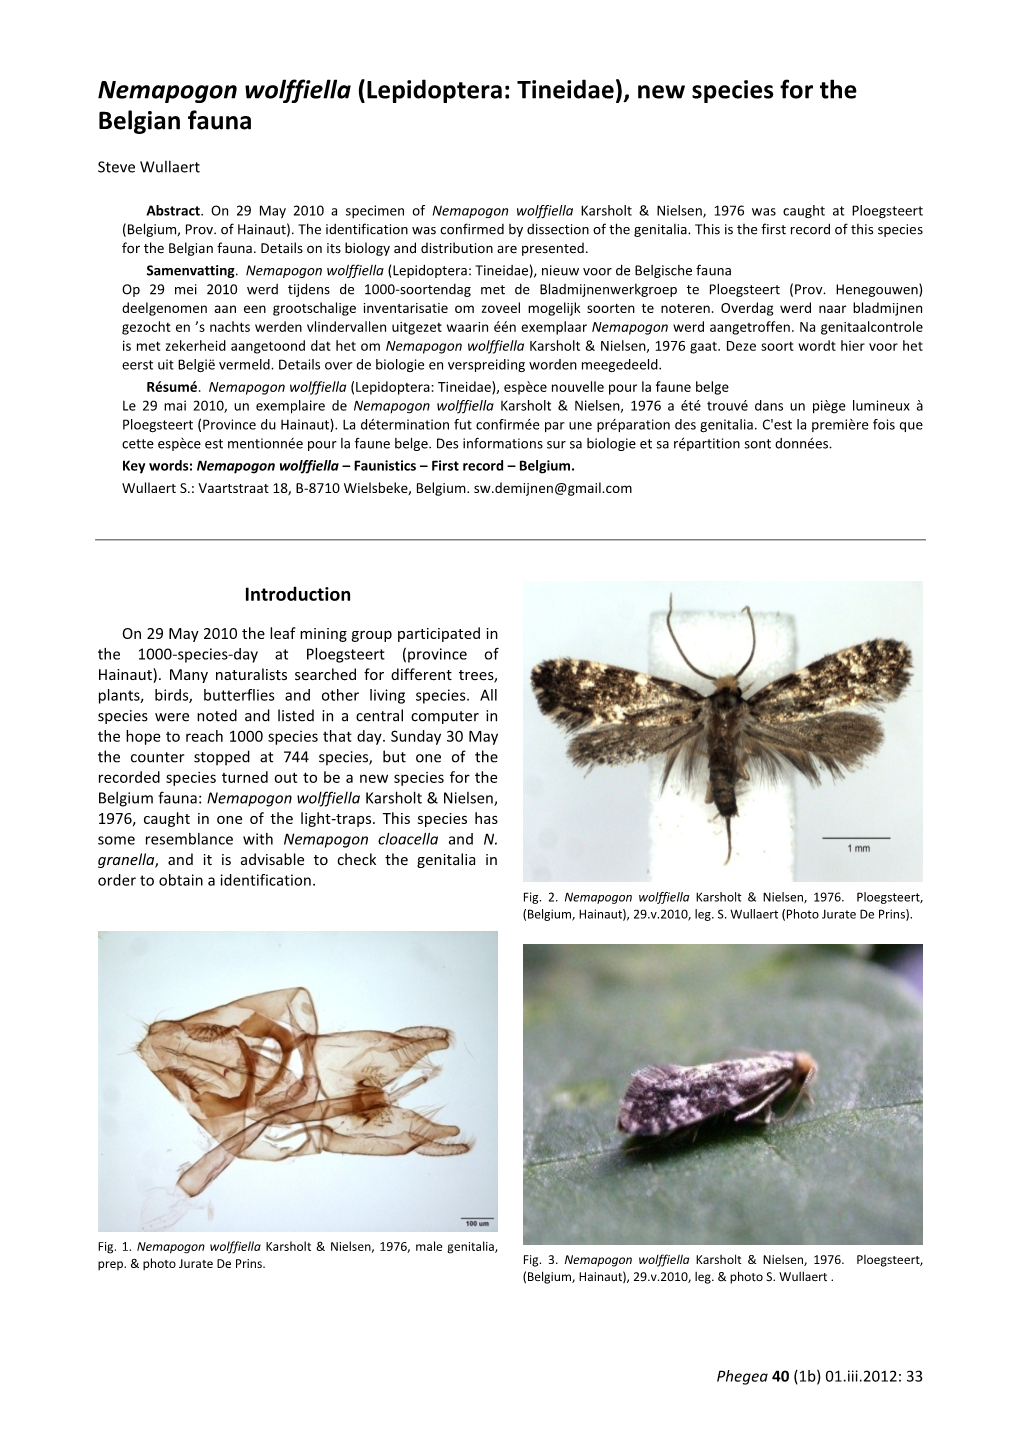 Nemapogon Wolffiella (Lepidoptera: Tineidae), New Species for the Belgian Fauna